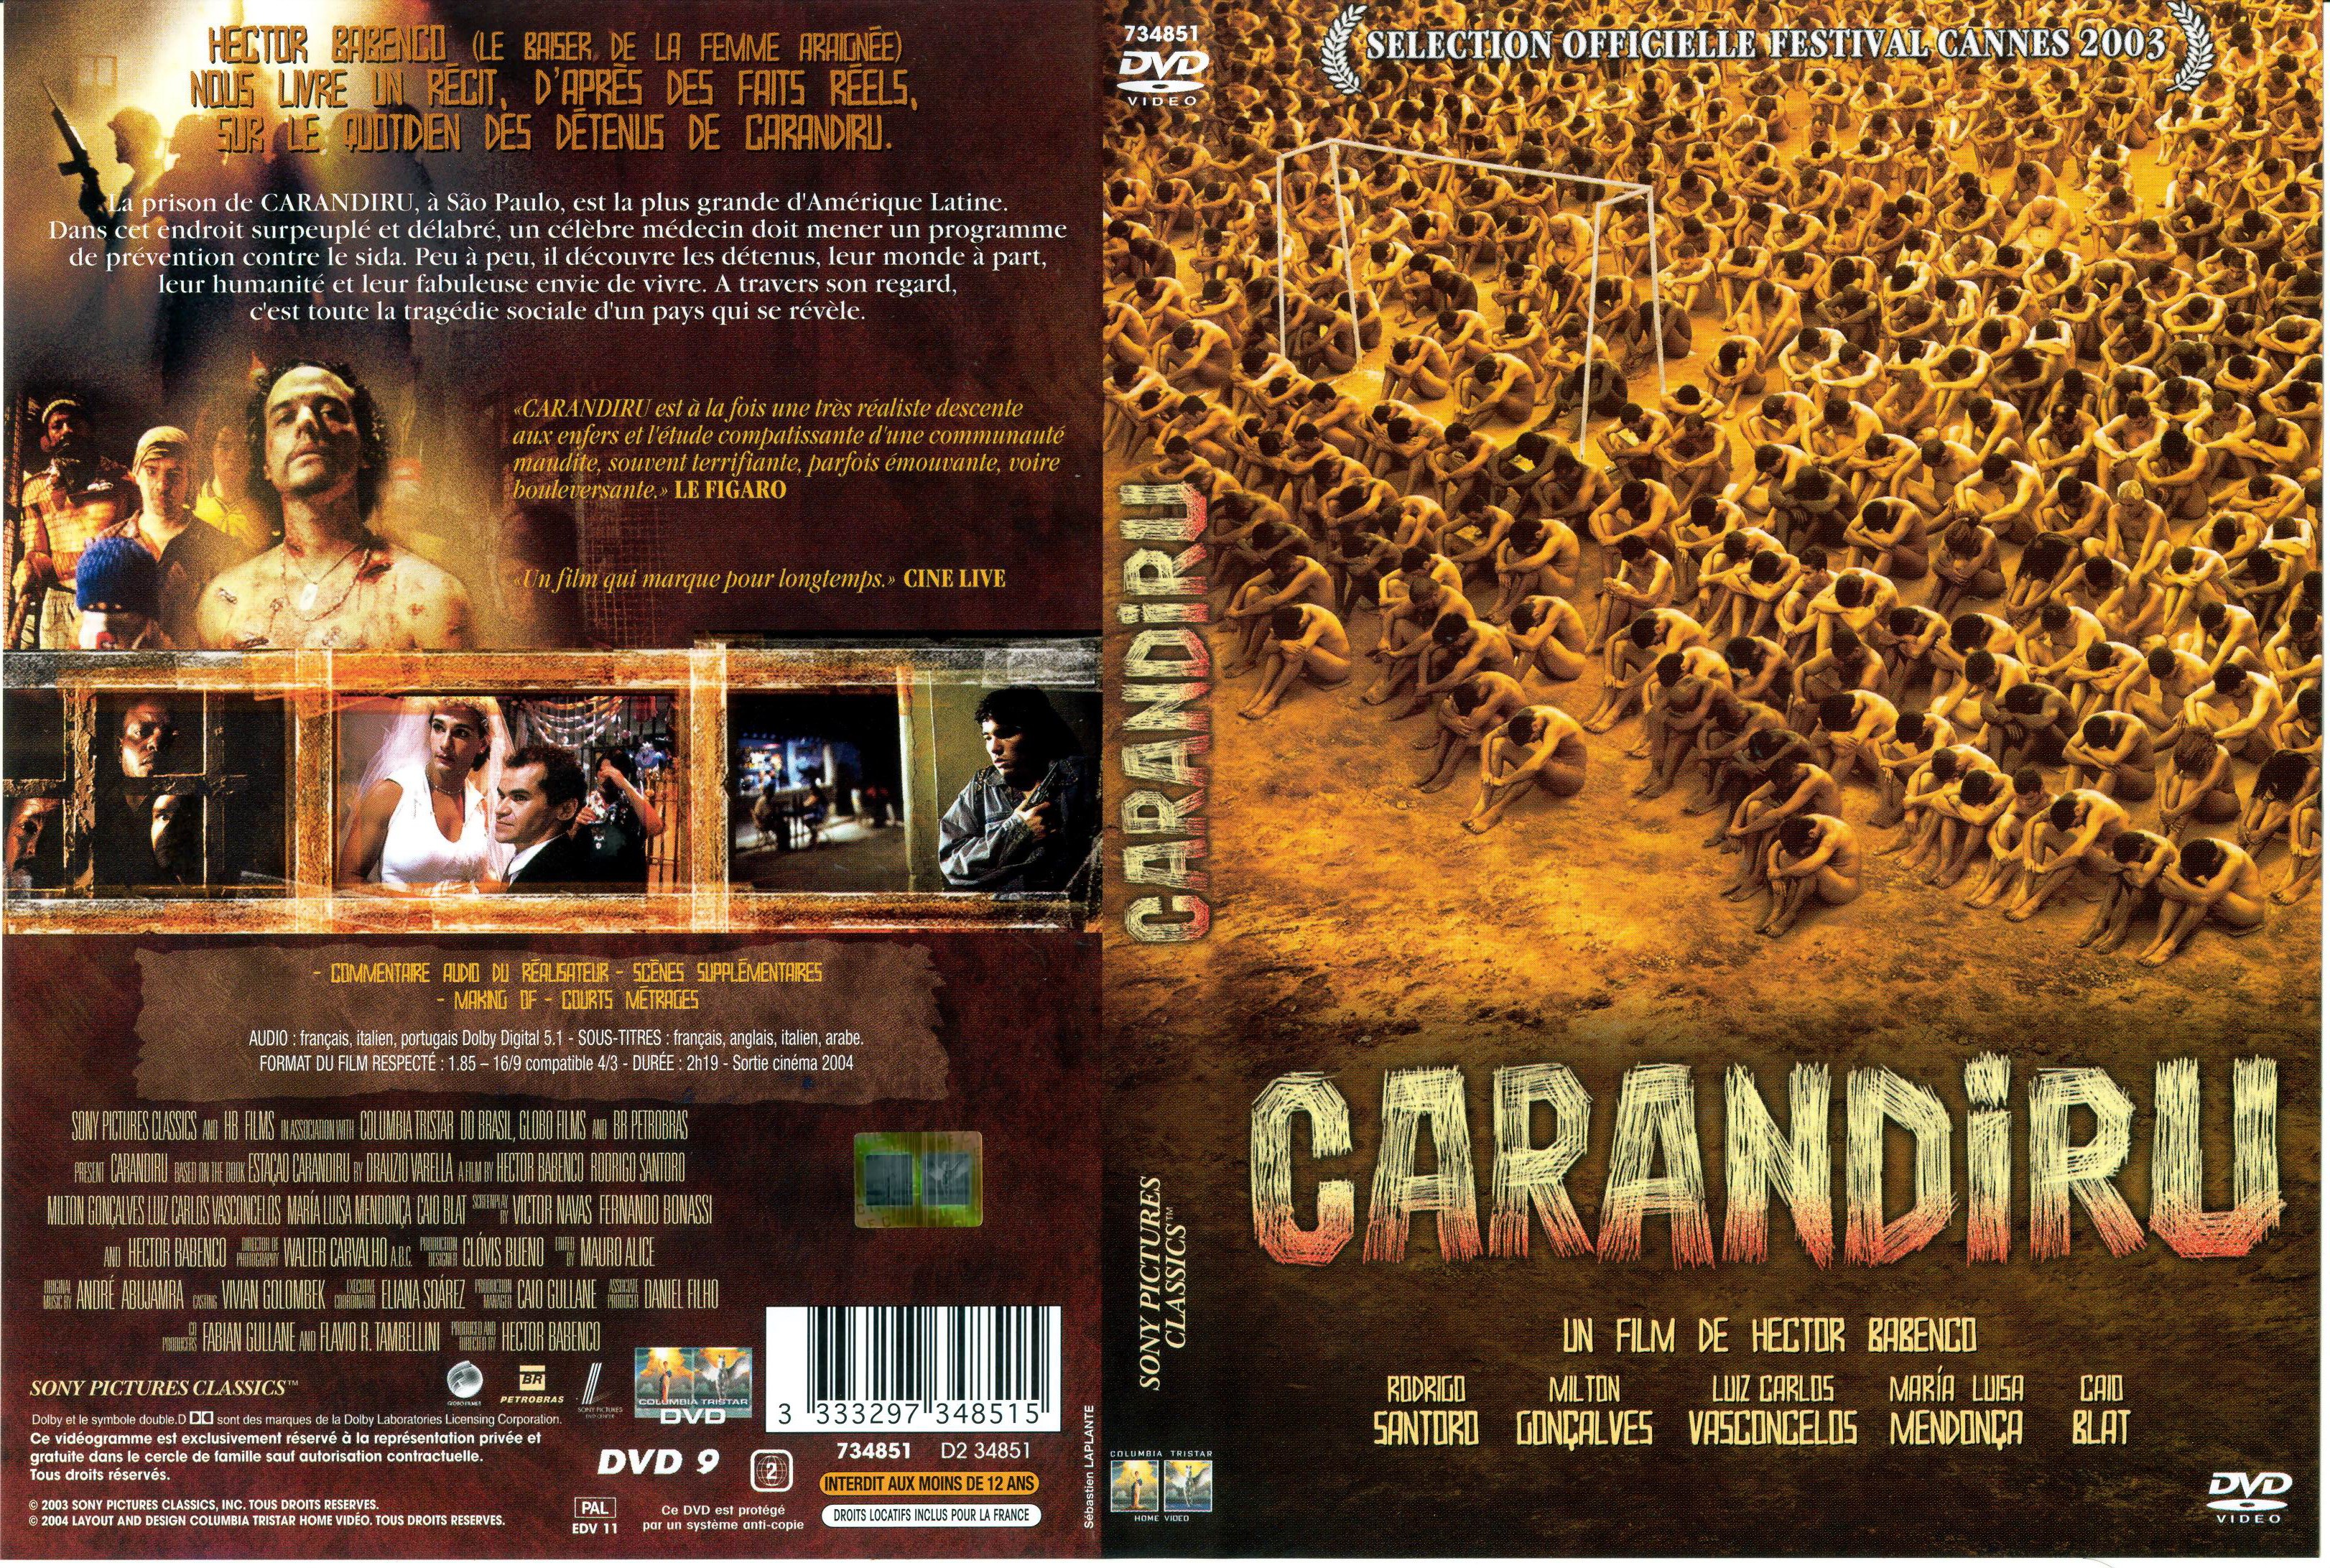 Jaquette DVD Carandiru v2